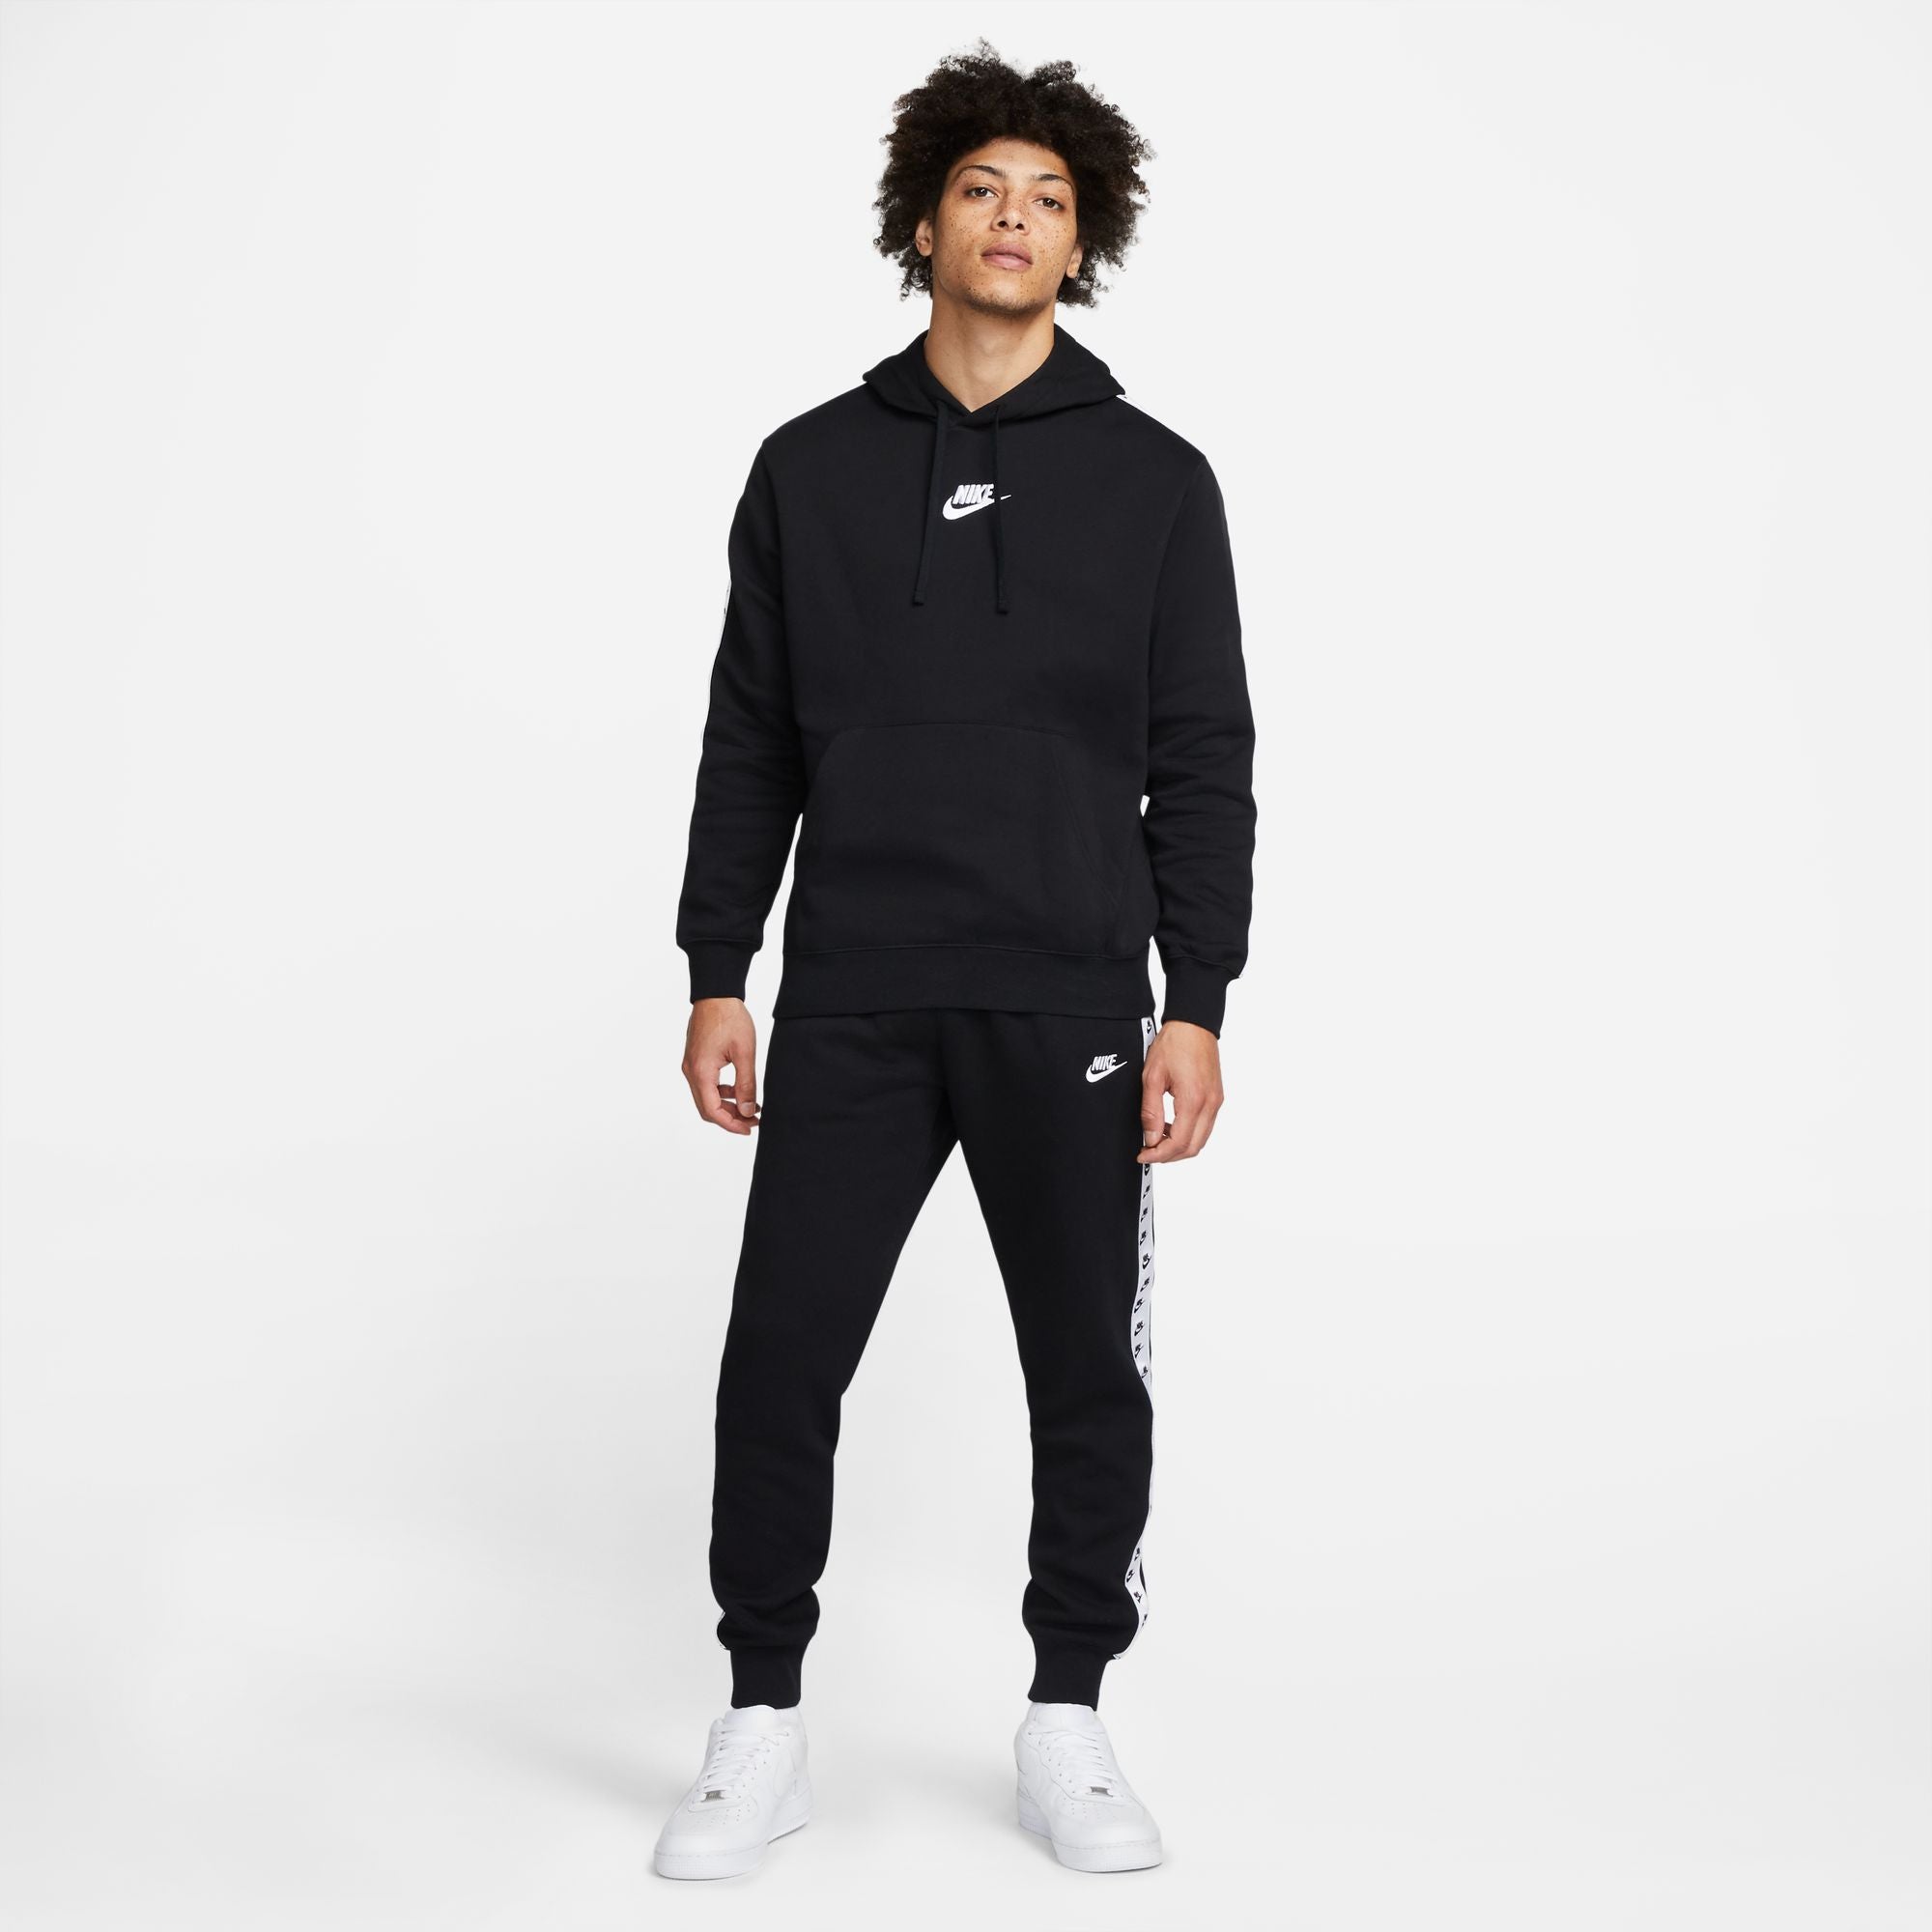 Chándal Nike Sportswear Essential - Negro/Blanco